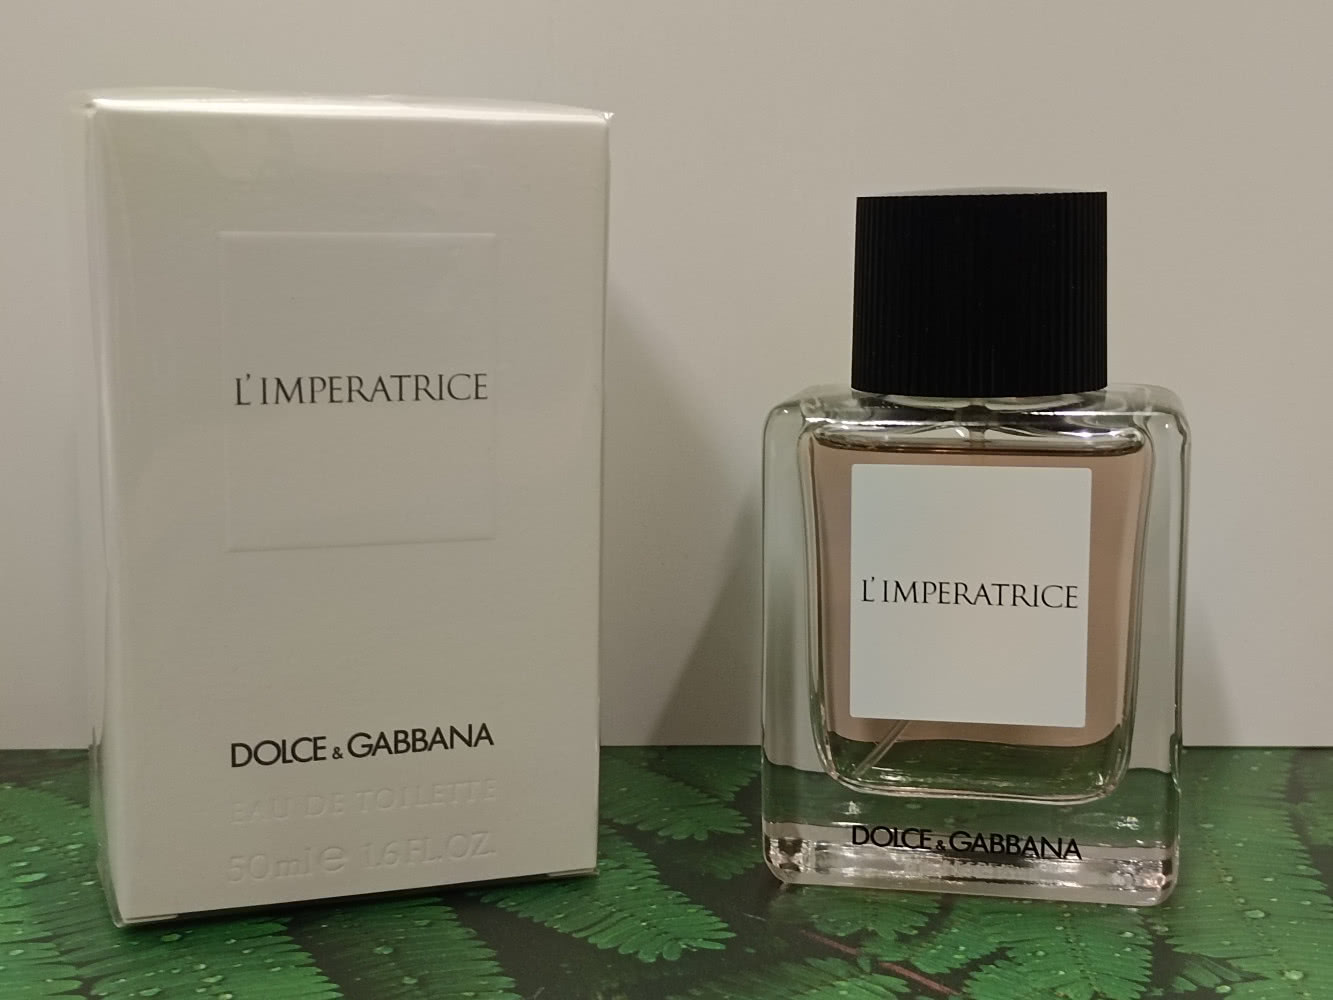 Dolce&Gabbana L'imperatrice 50 ml